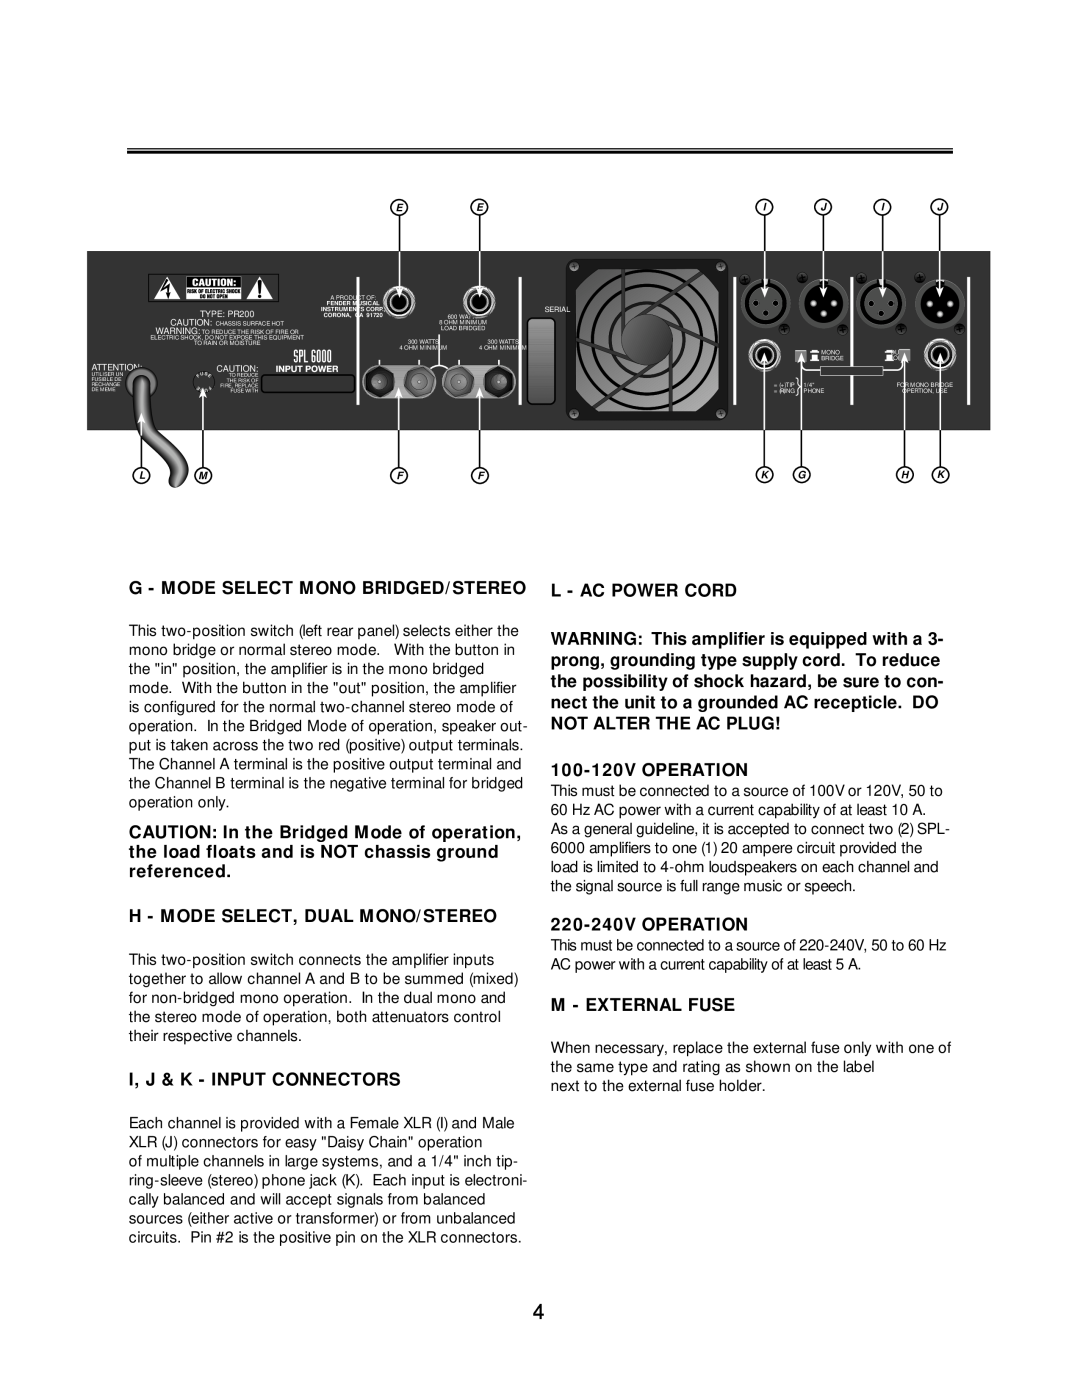 Fender SPL-6000P G - Mode Select Mono Bridged/Stereo, H - Mode Select, Dual Mono/Stereo, I, J & K - Input Connectors 